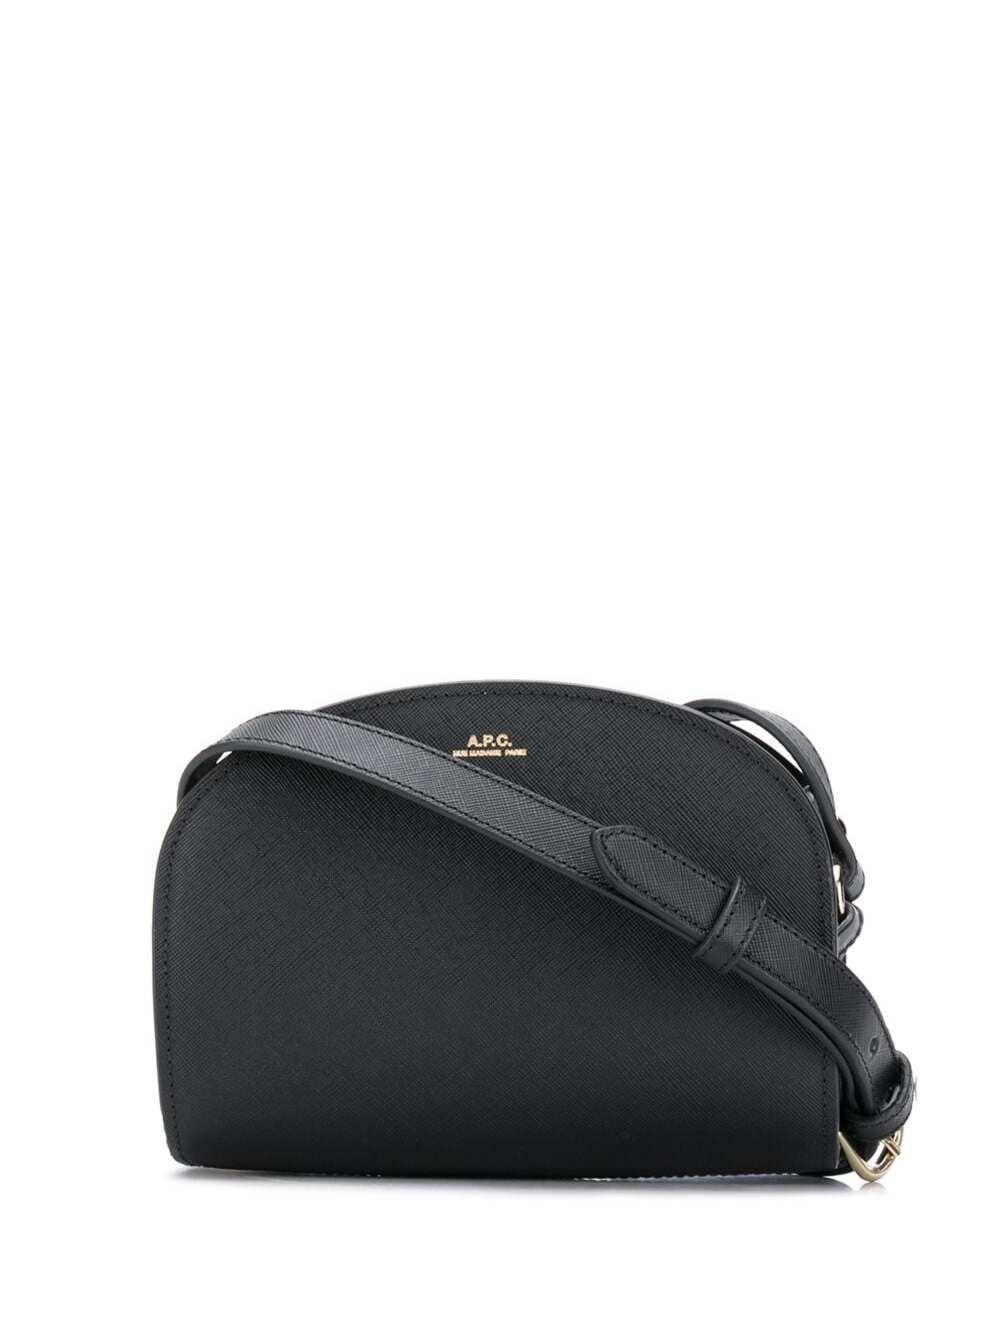 A.P.C. Woman's Sac Demi-lune Mini Leather Crossbody Bag in Black | Lyst